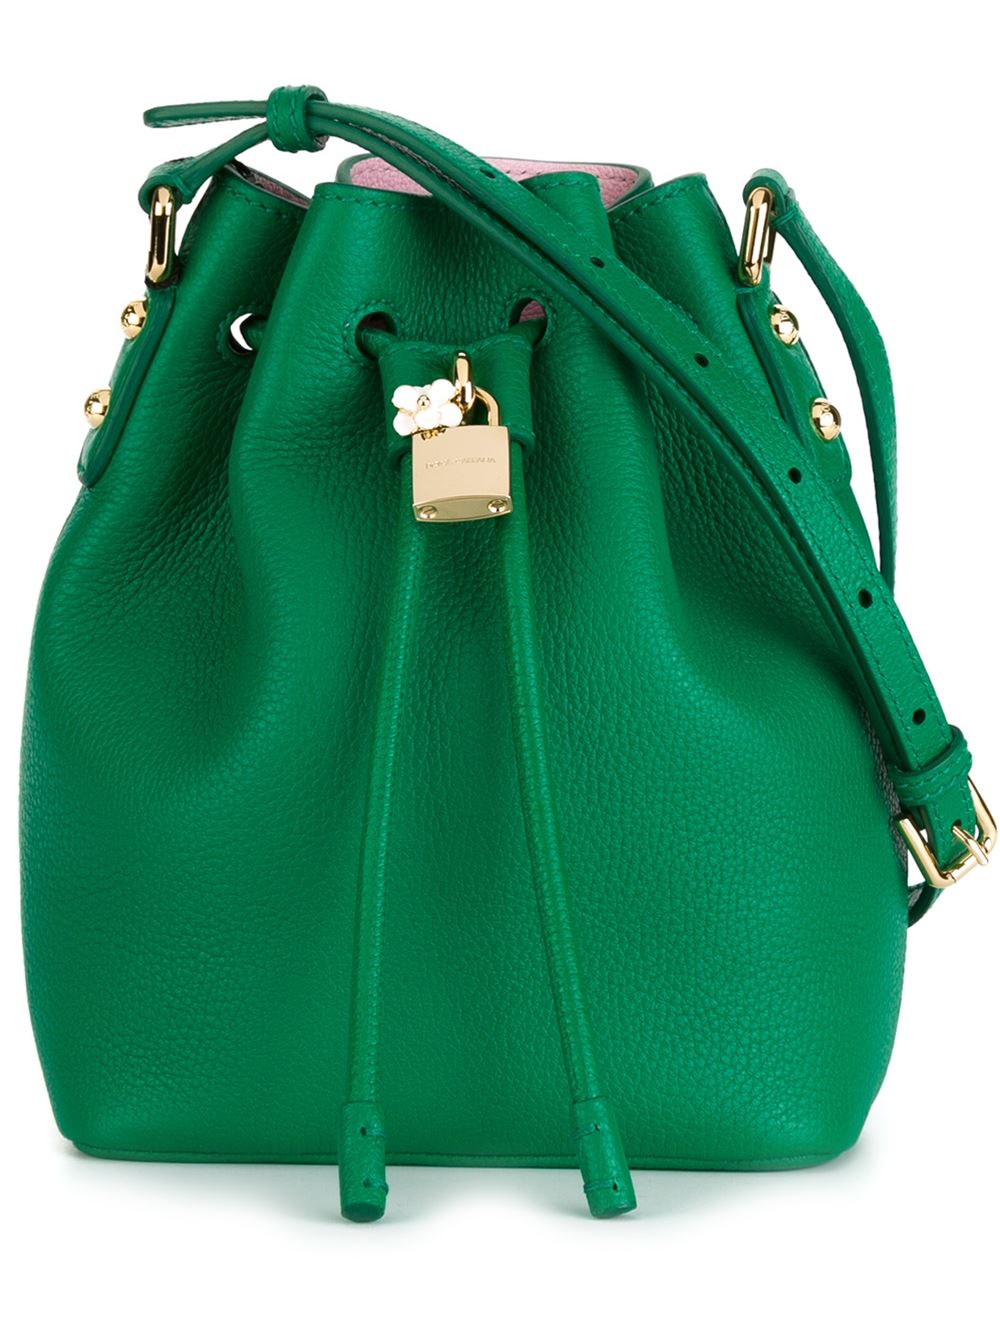 Dolce зеленые. Сумка Дольче Габбана зеленая. Дольче Габбана сумка мешок. Сумка Dolce&Gabbana зеленый. Сумка d&g зеленый.